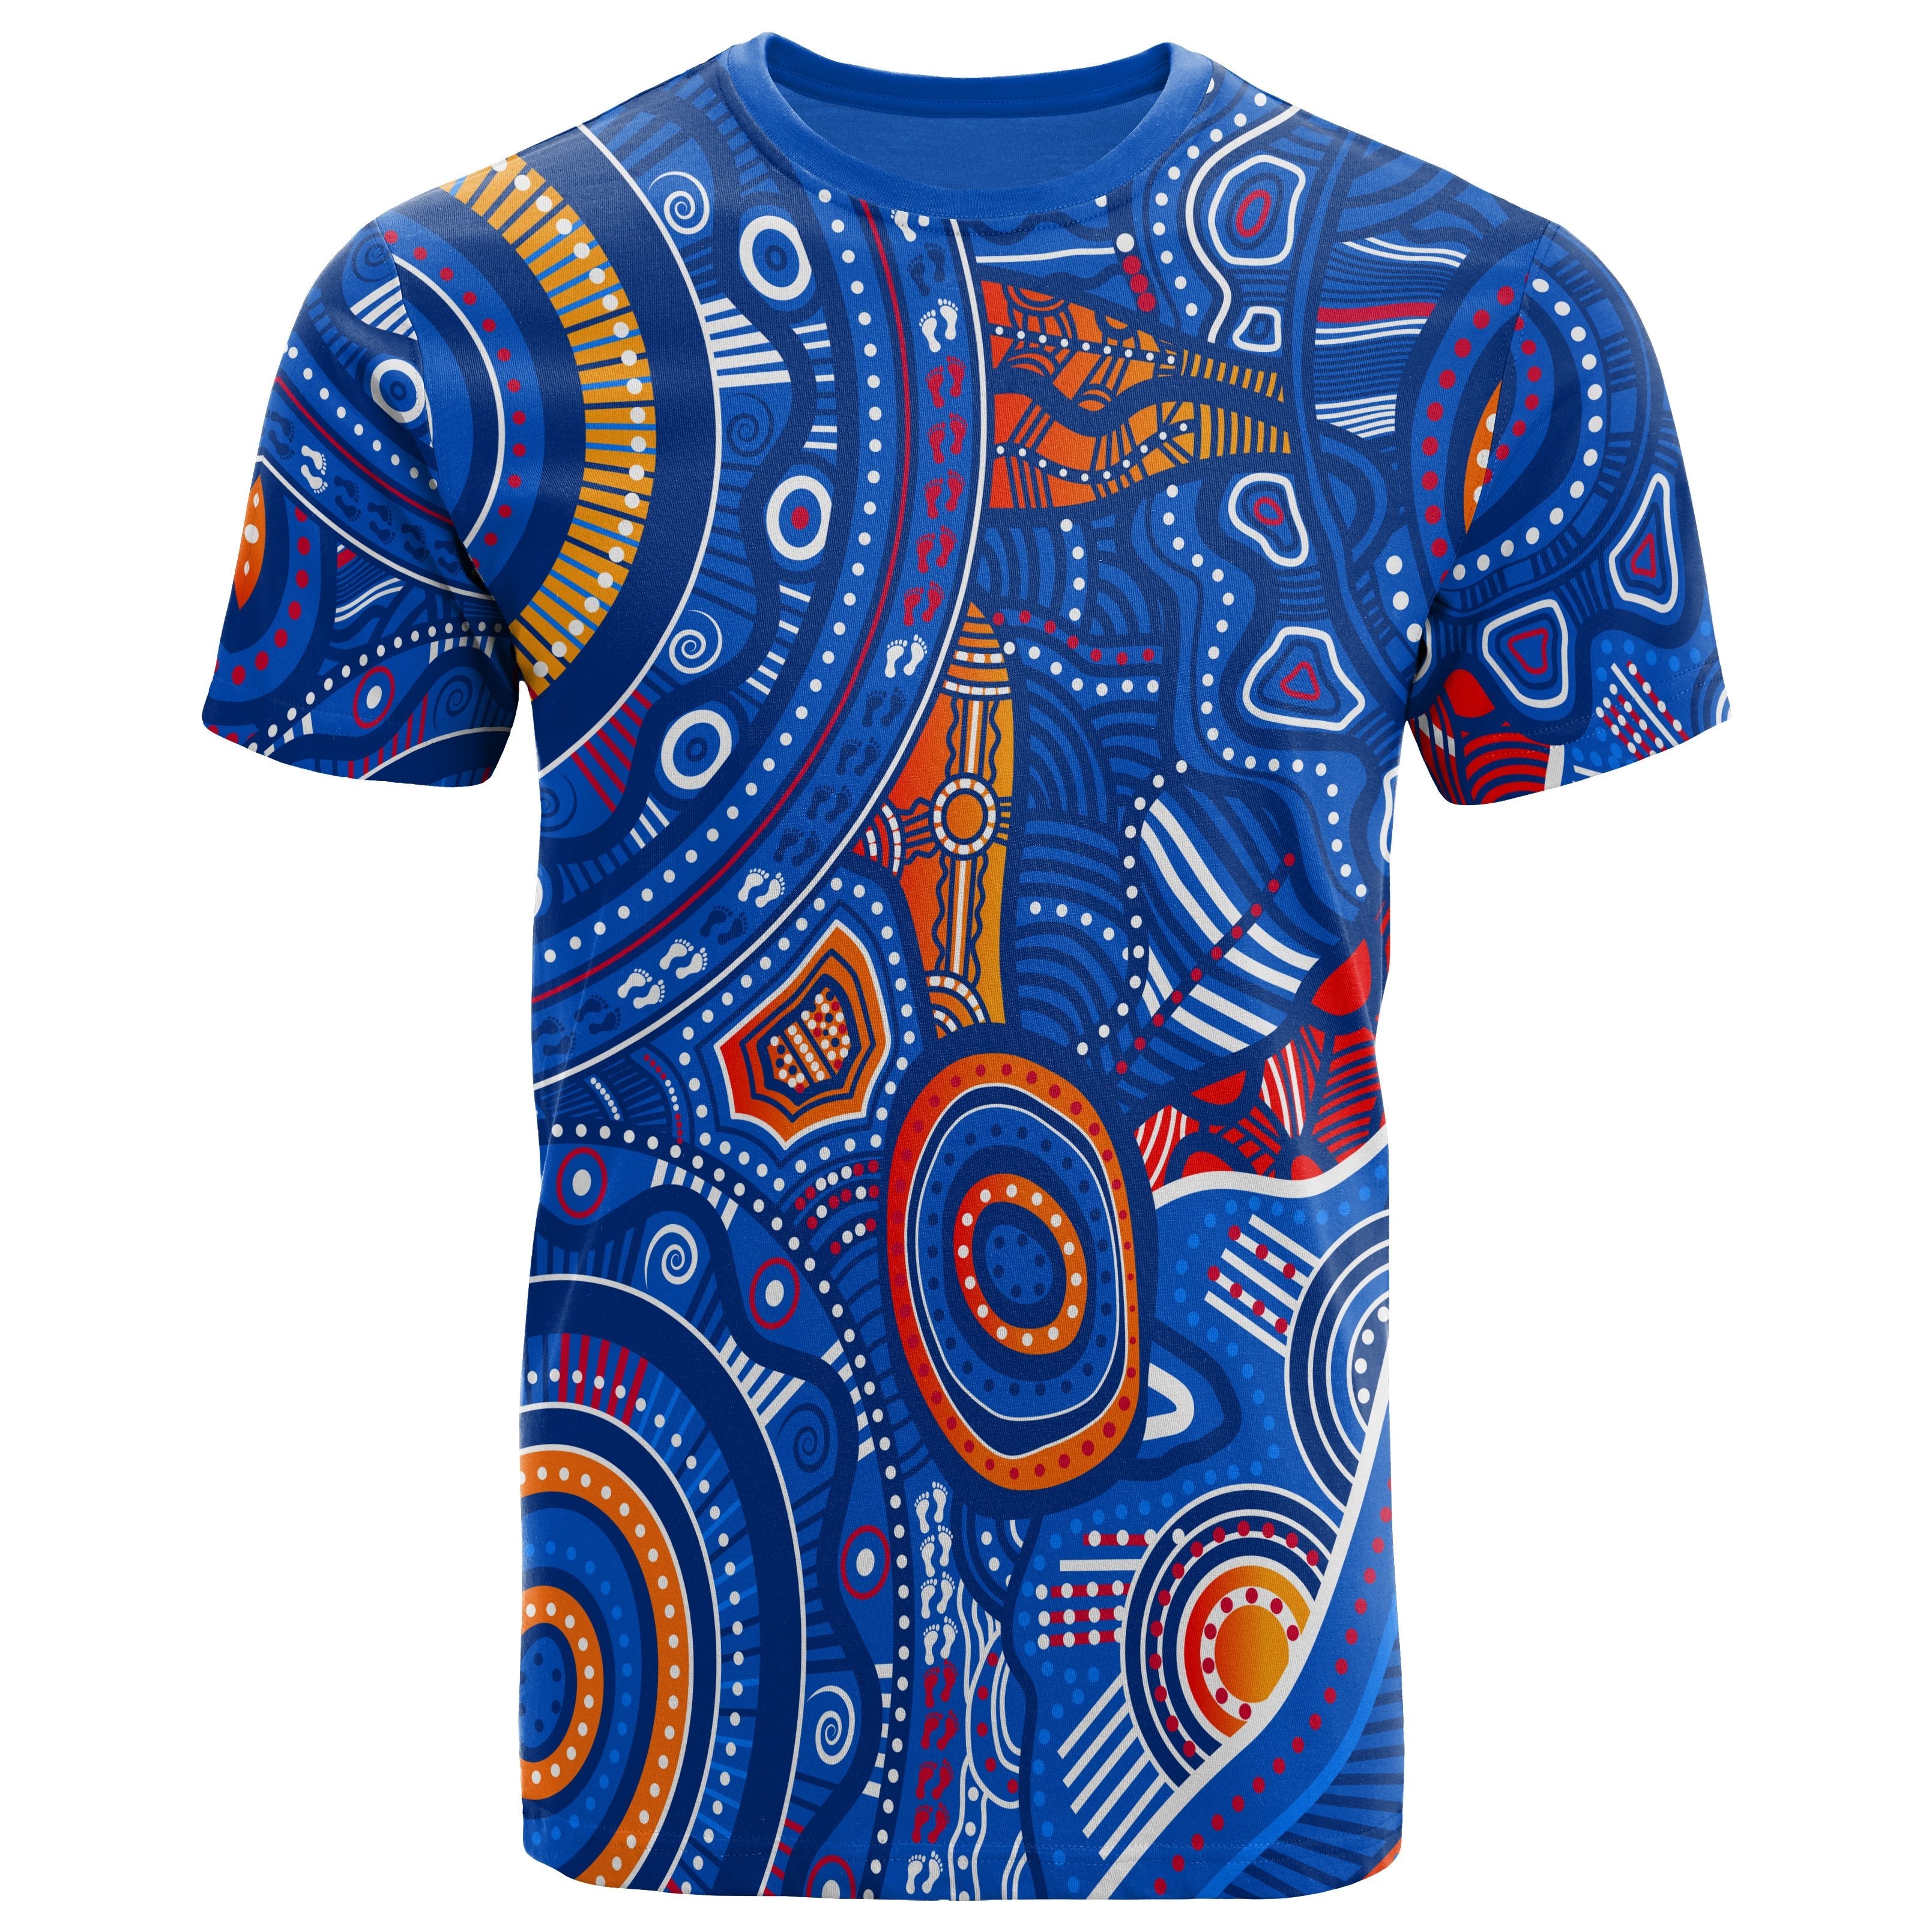 kid-aboriginal-t-shirt-indigenous-footprint-patterns-blue-color